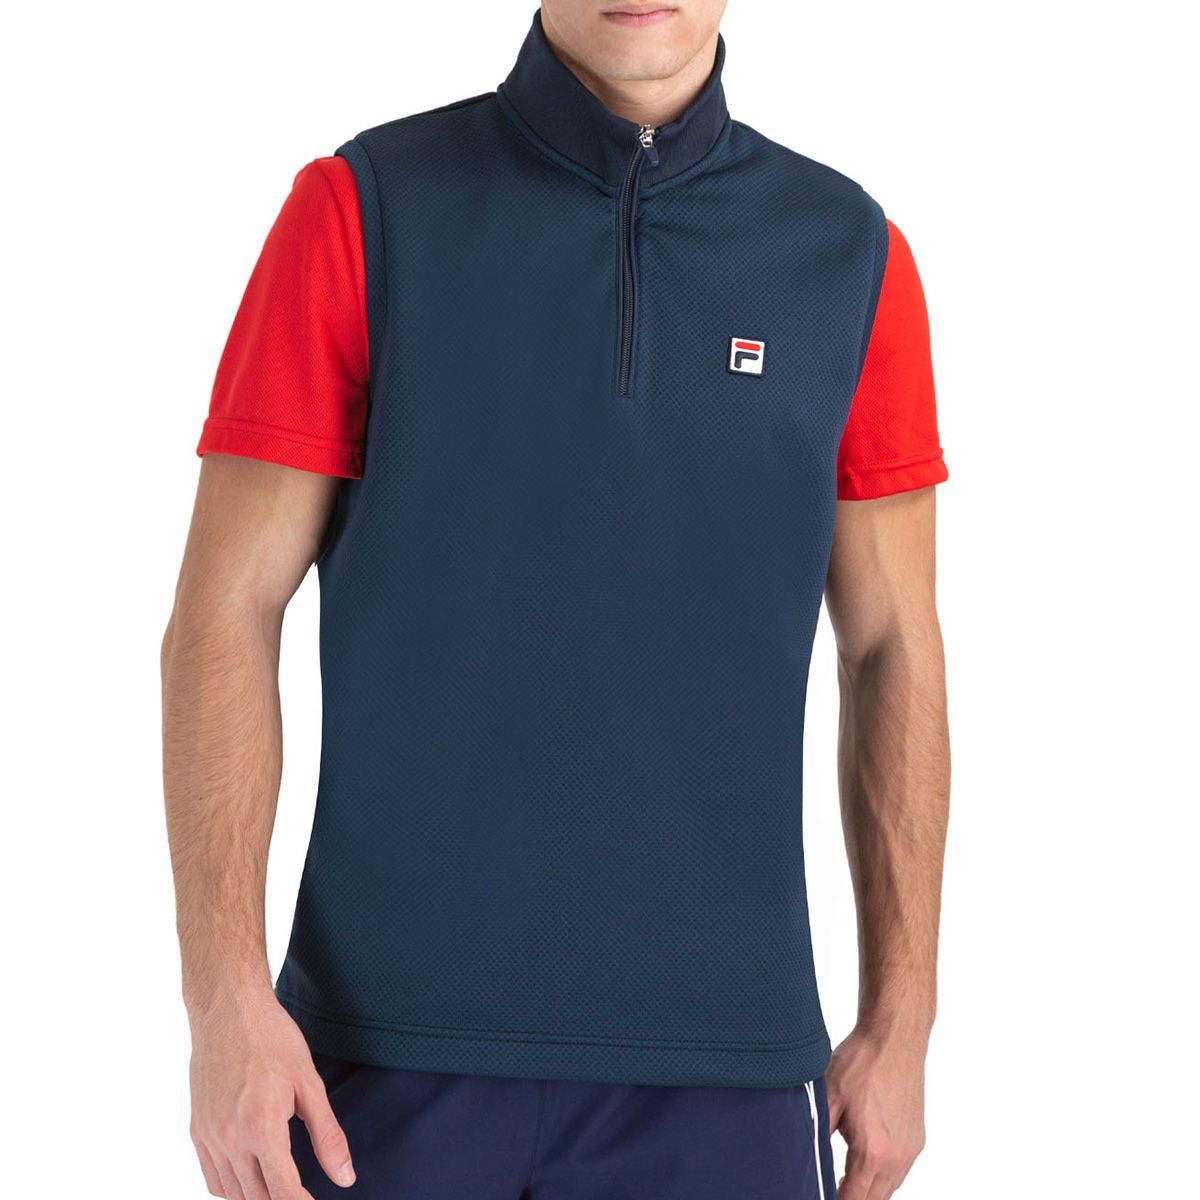 Fila Toby Men's Tennis Vest FBM212020-100